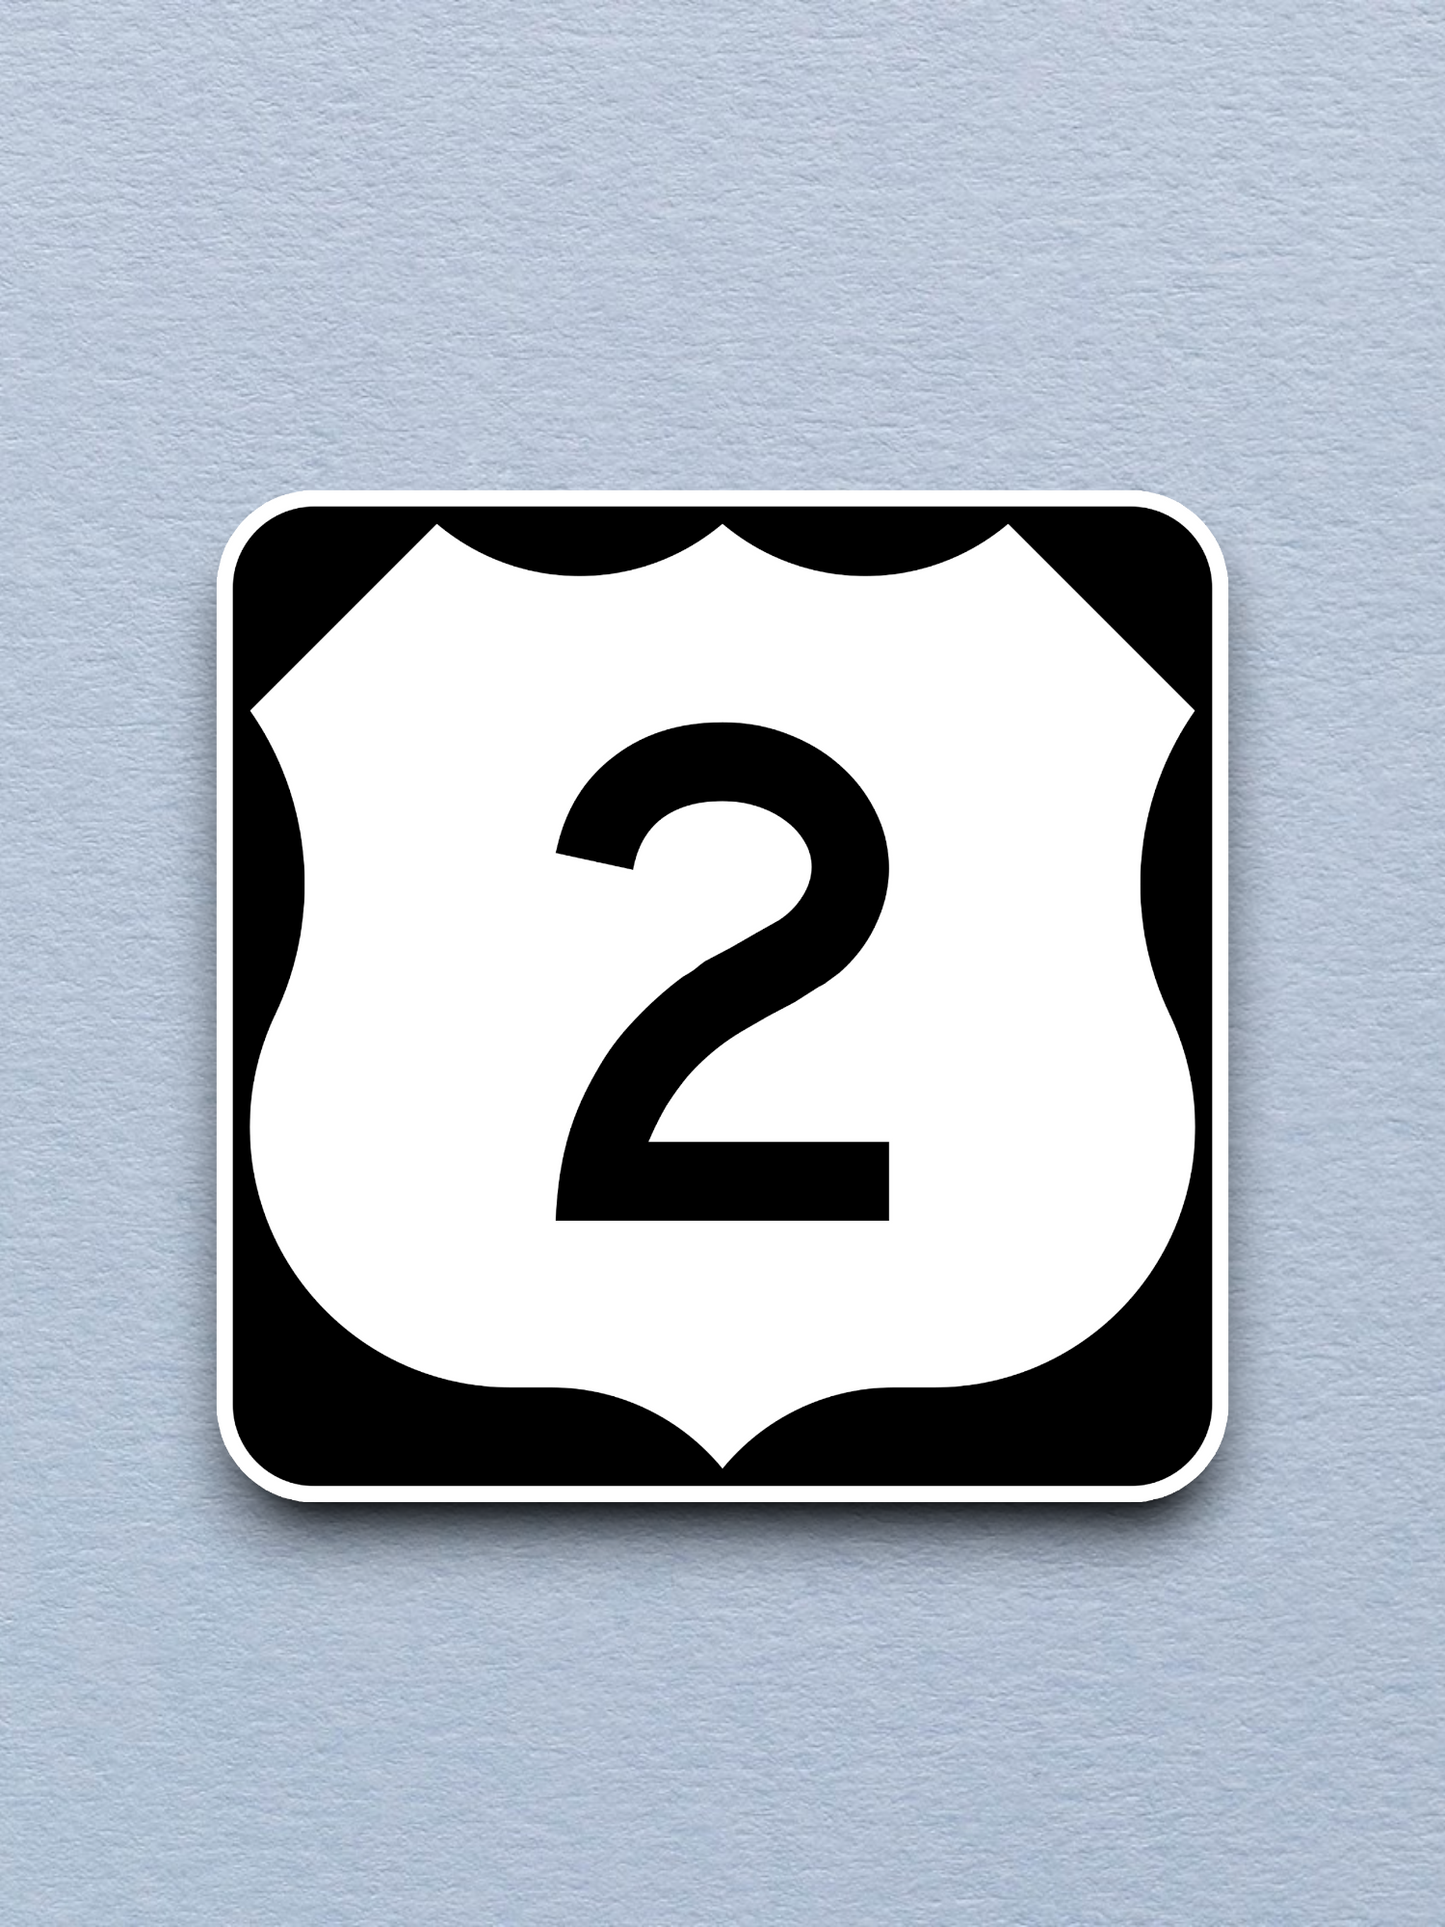 U.S. Route 2 Road Sign Sticker